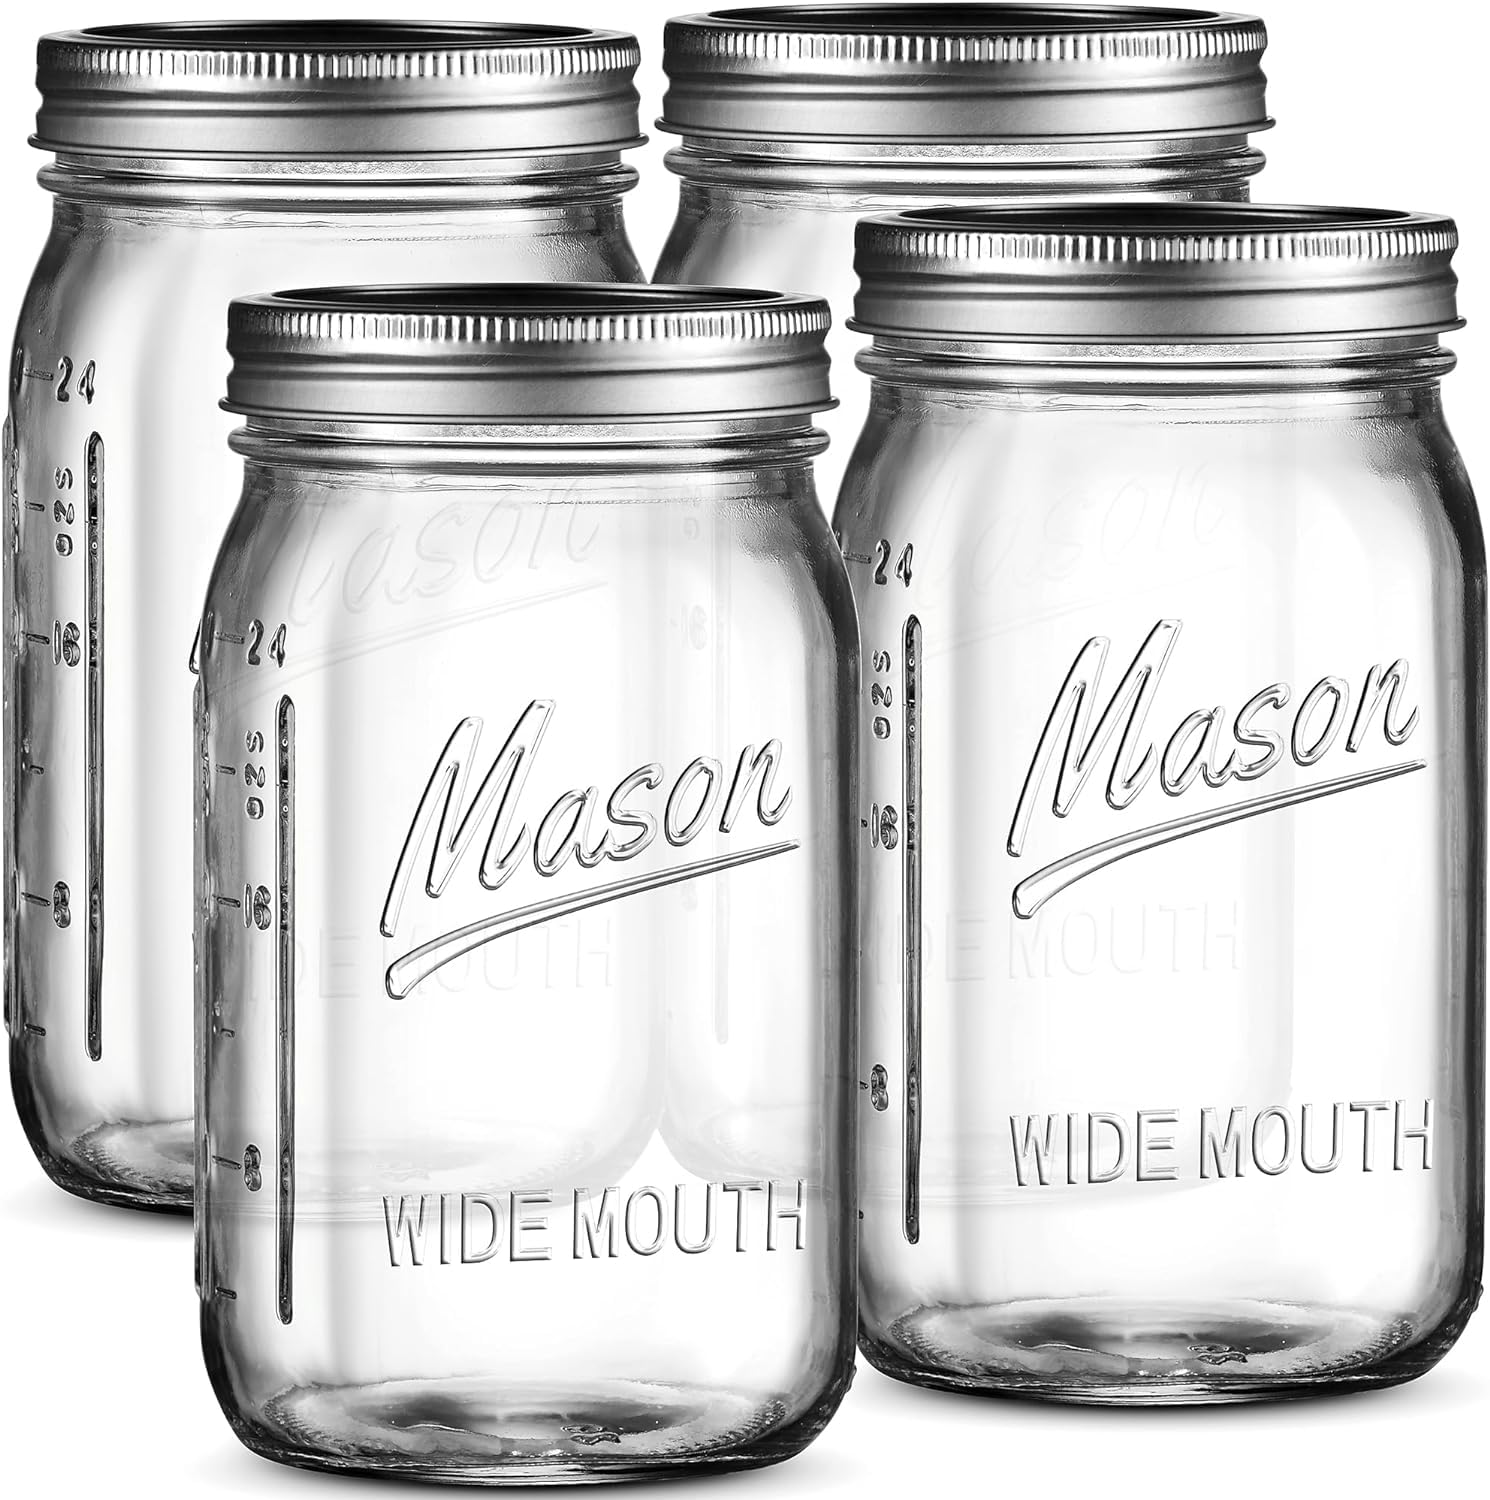 SEWANTA Wide Mouth Mason Jars 32 oz [6 Pack] With mason jar lids and Bands, mason jars 32 oz - For Canning, Fermenting, Pickling - Jar Decor - Microwave/Freeze/Dishwasher Safe.  - Like New